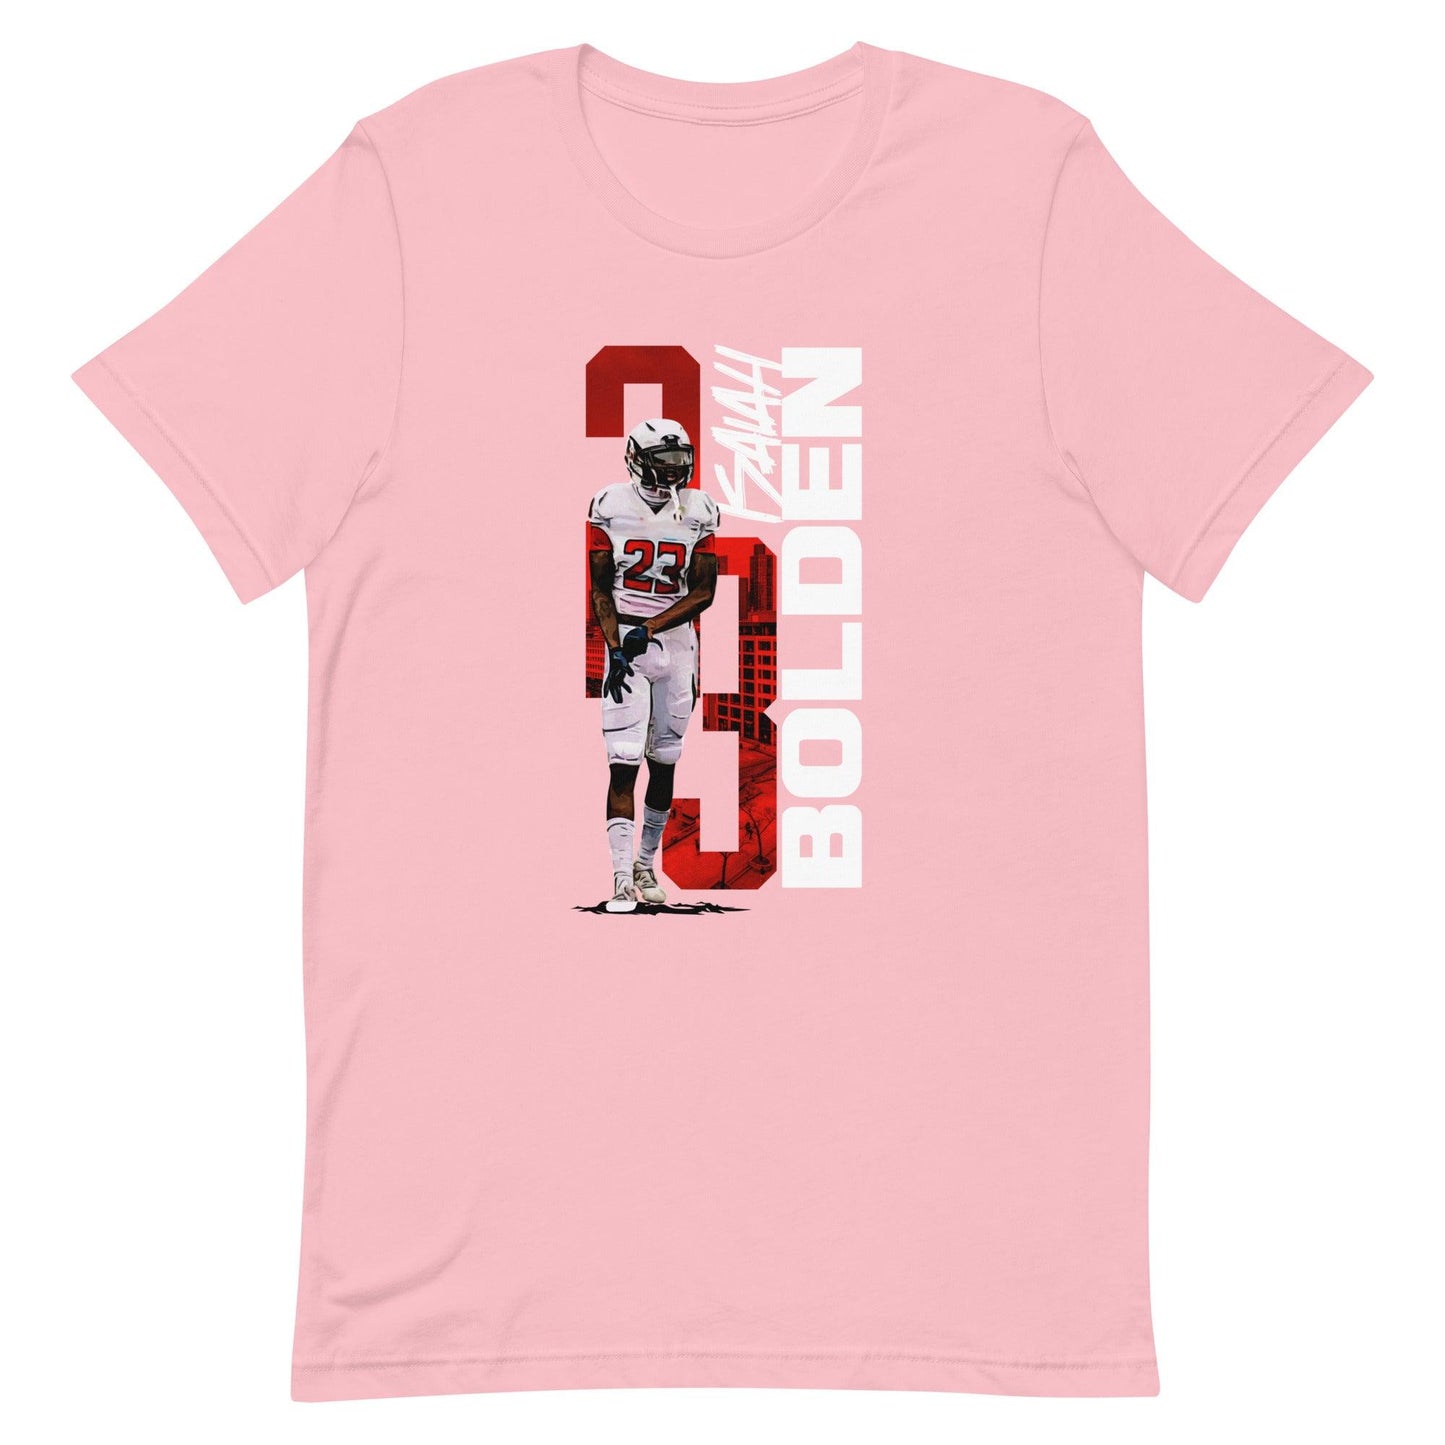 Isaiah Bolden "Gameday" t-shirt - Fan Arch